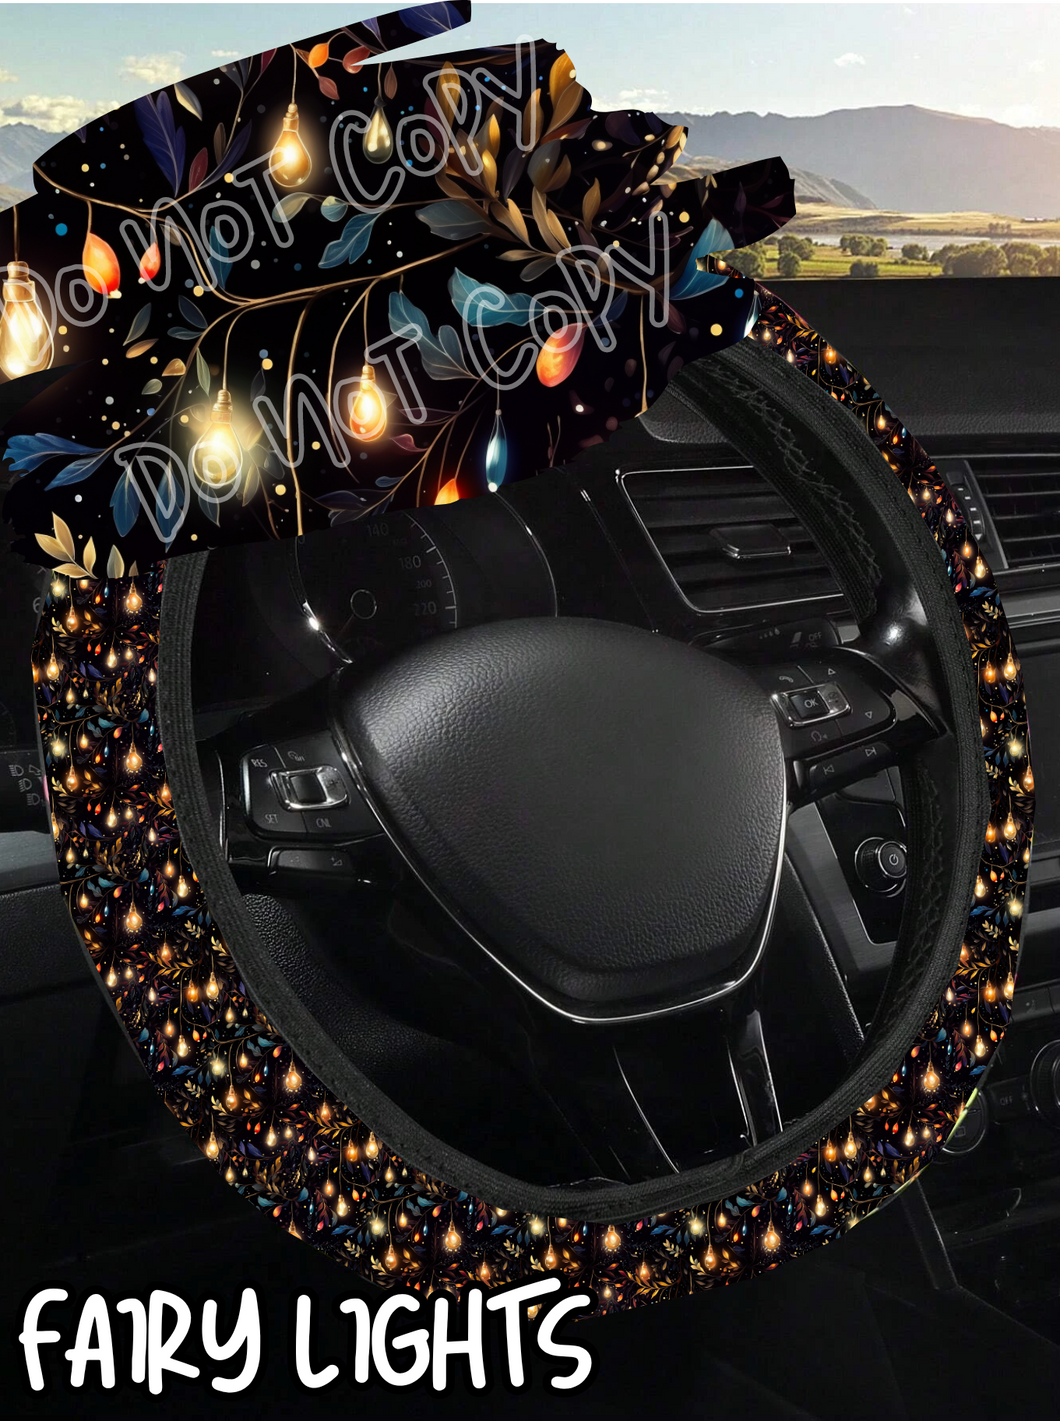 Fairy Lights - Steering Wheel Cover Preorder Round 3 Closing 10/25 ETA Early Dec